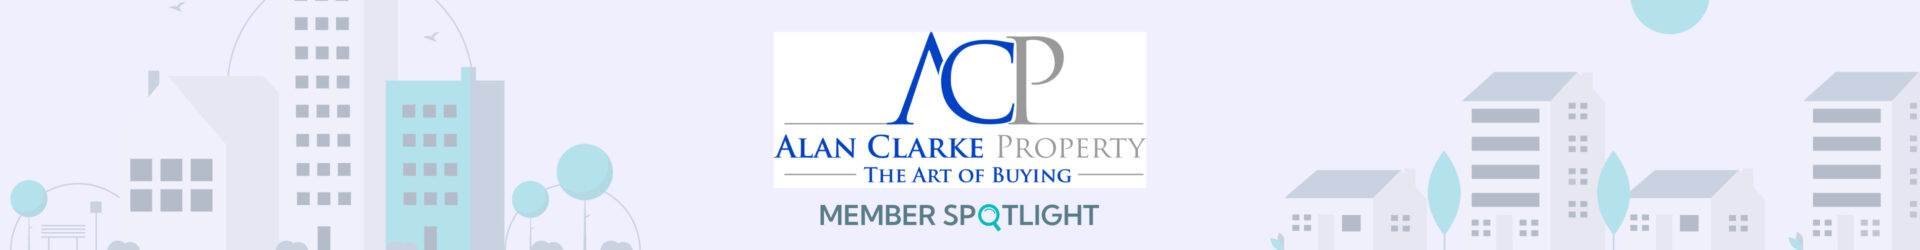 Member Spotlight:                       Alan Clarke Property (ACP)